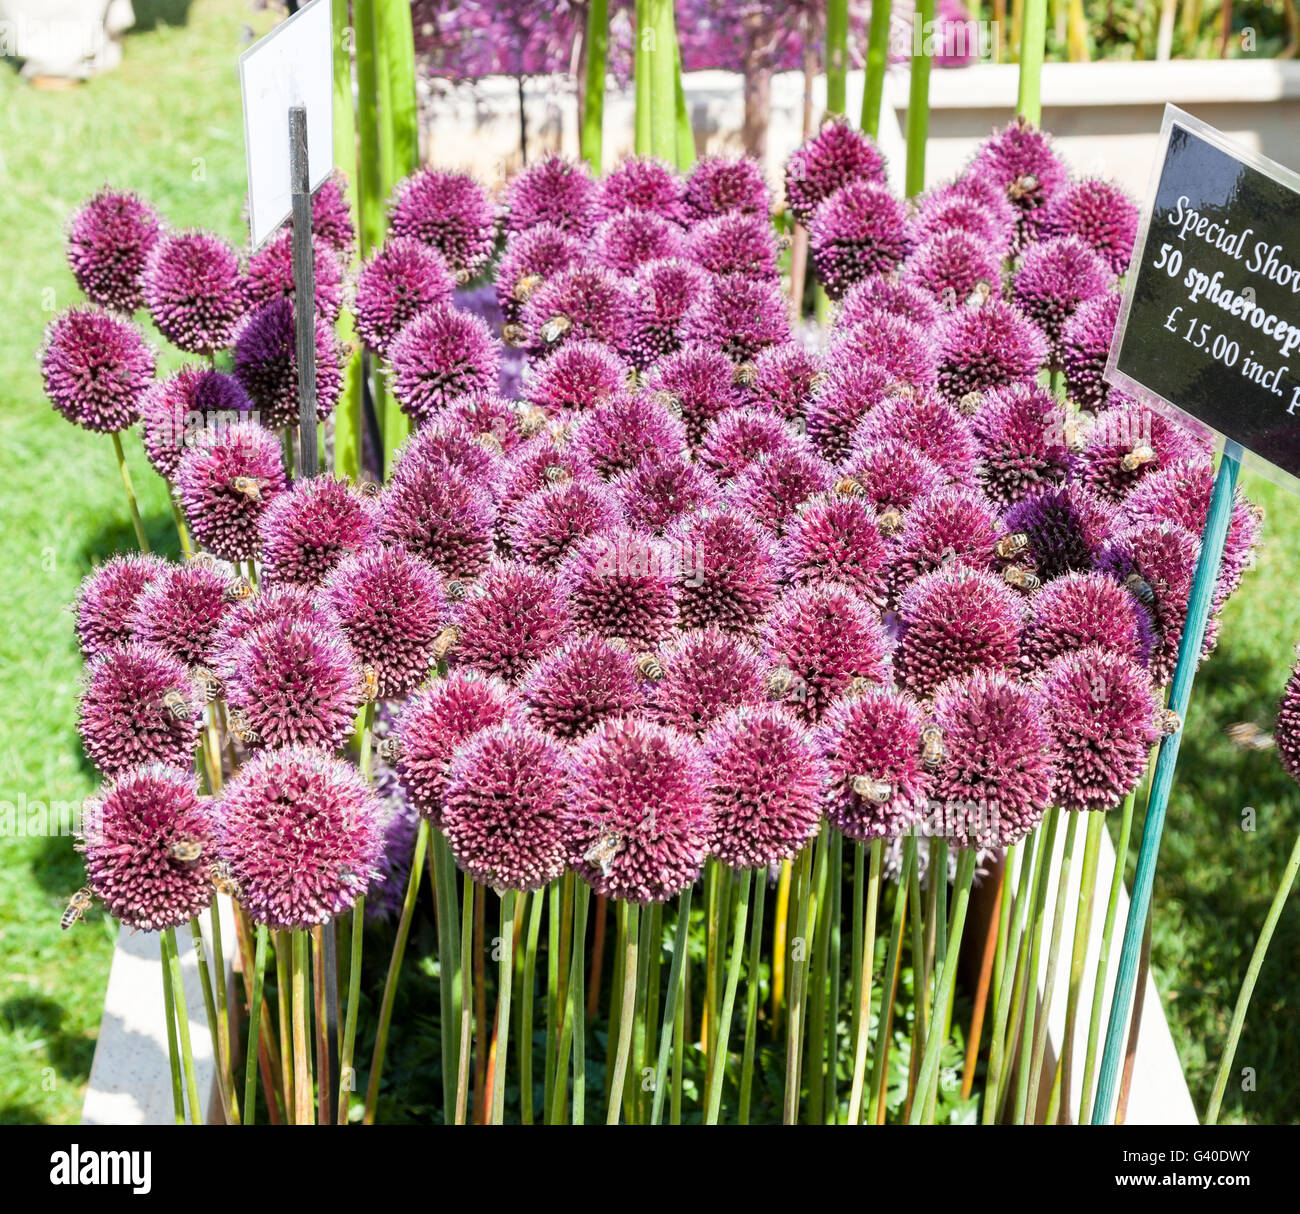 The pink purple flower heads of Allium sphaerocephalon or ornamental onion Stock Photo